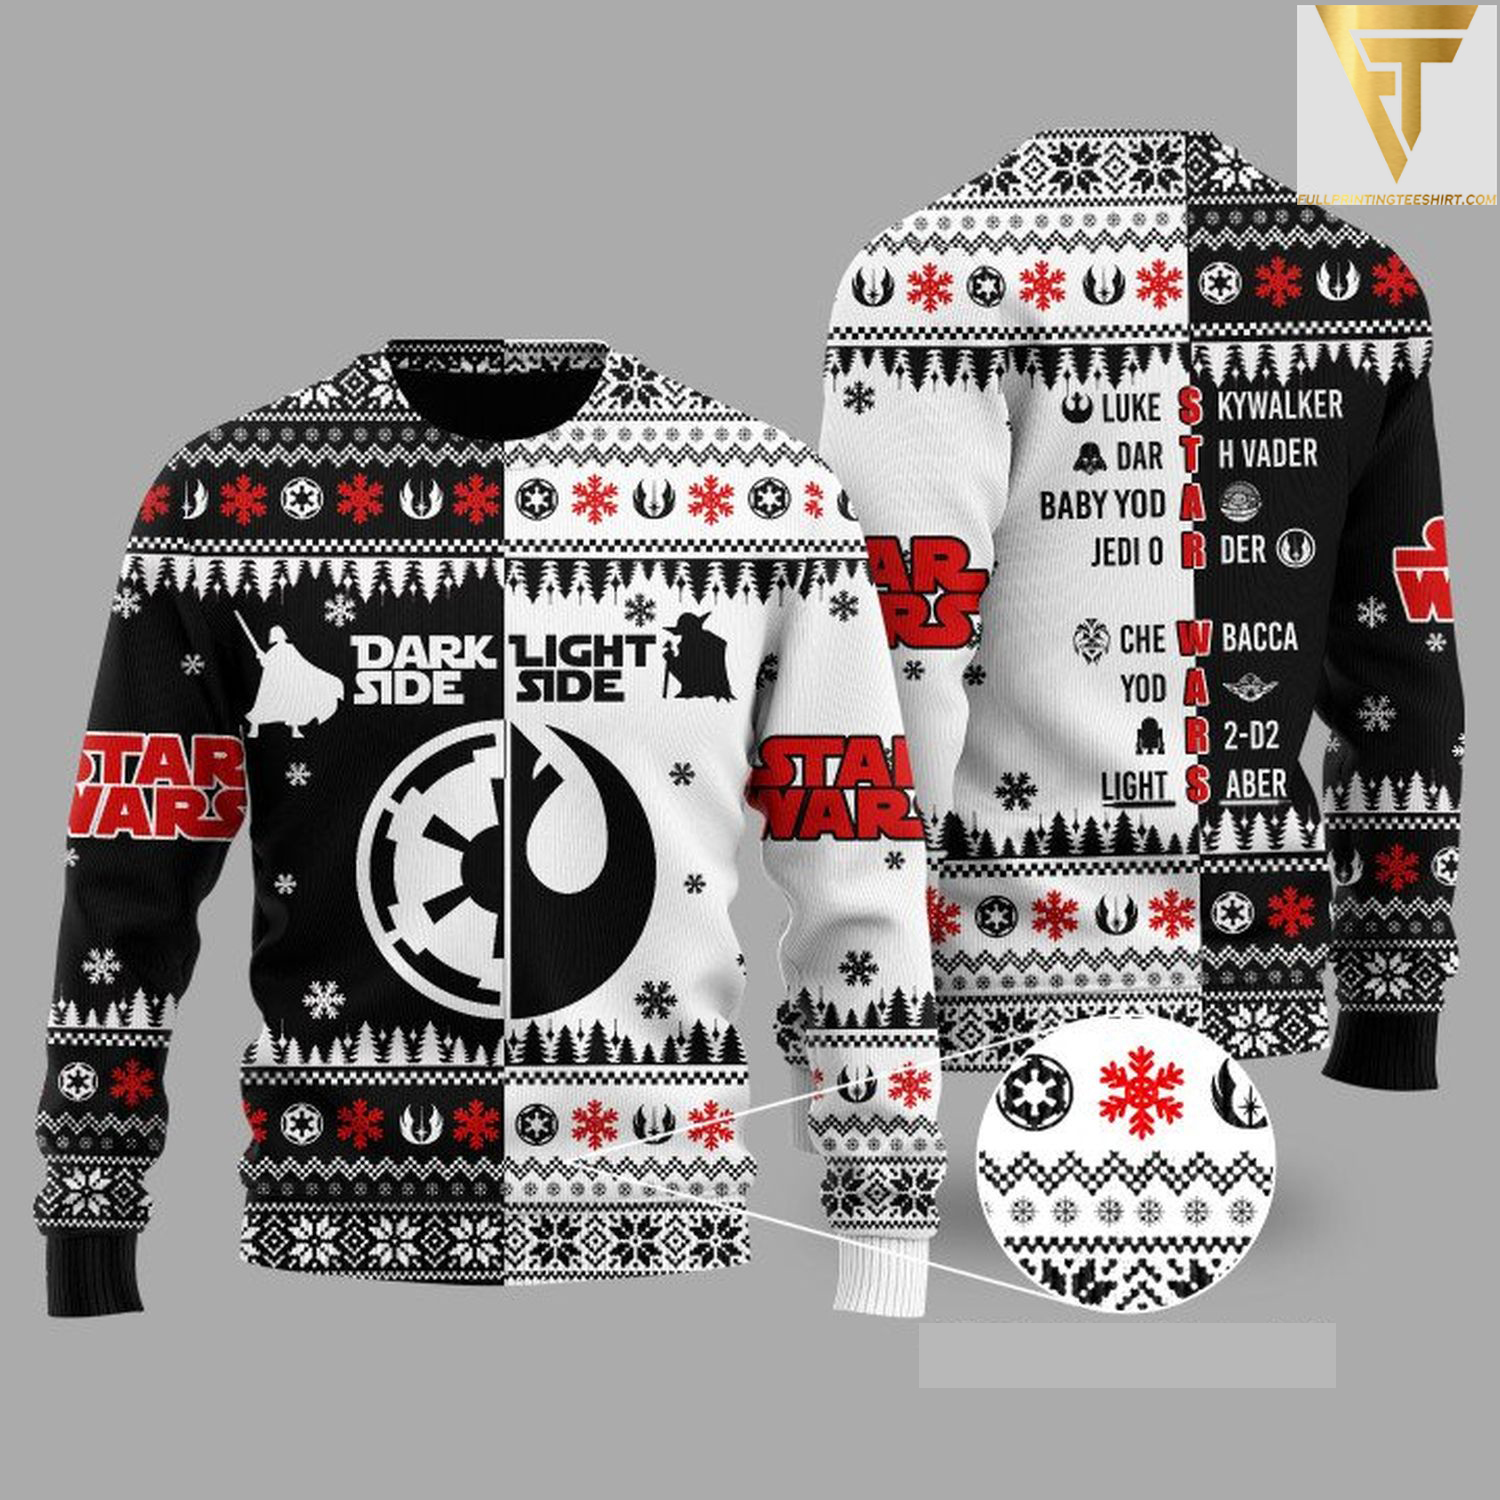 Star wars dark side light side ugly christmas sweater - Copy (2)